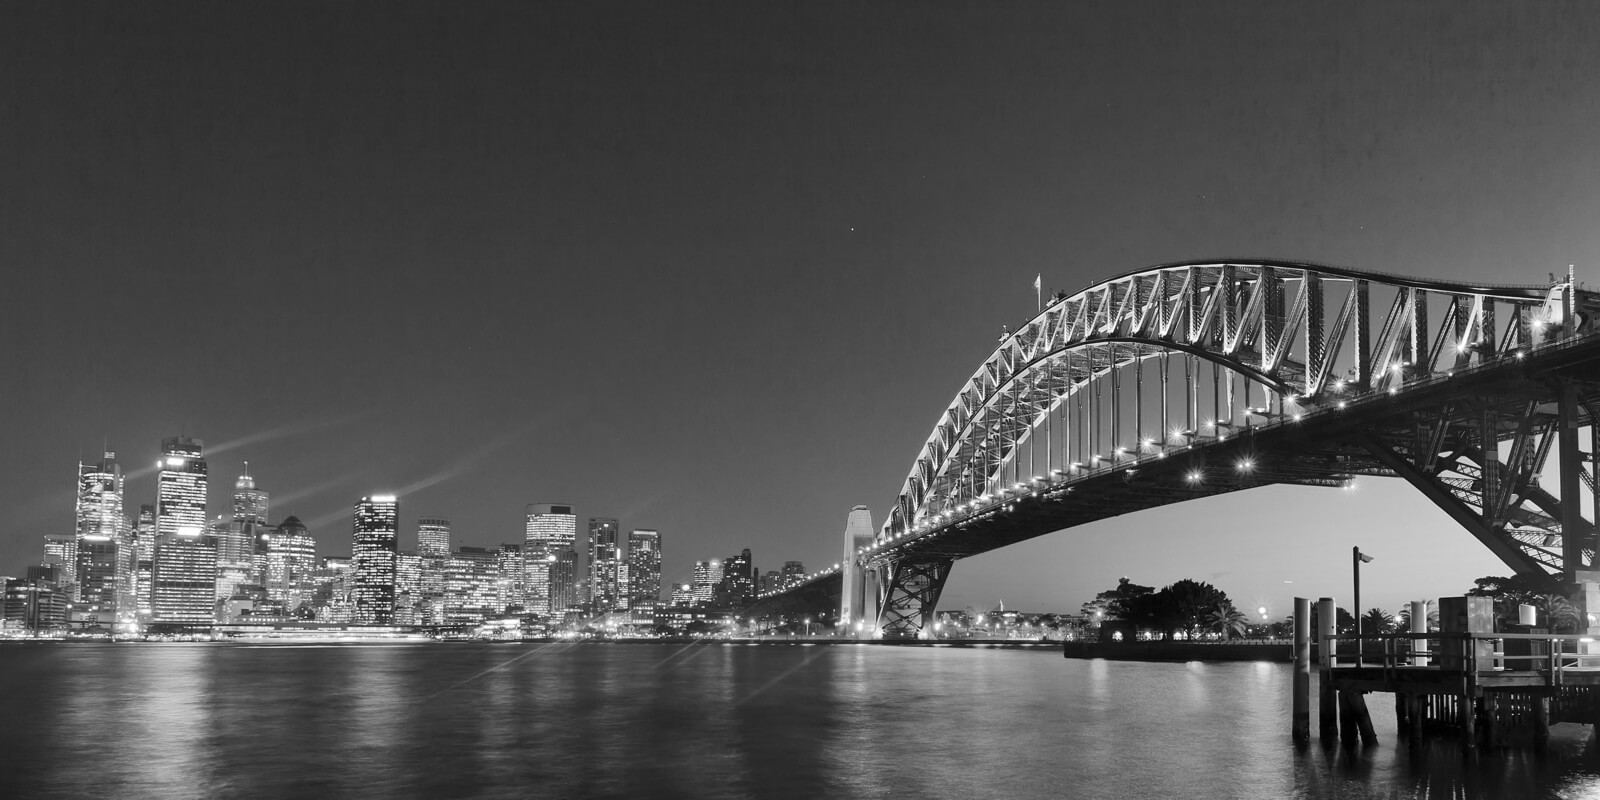 Vlies Tapete XXL Poster Fototapete Sydney Australien Harbour Bridge